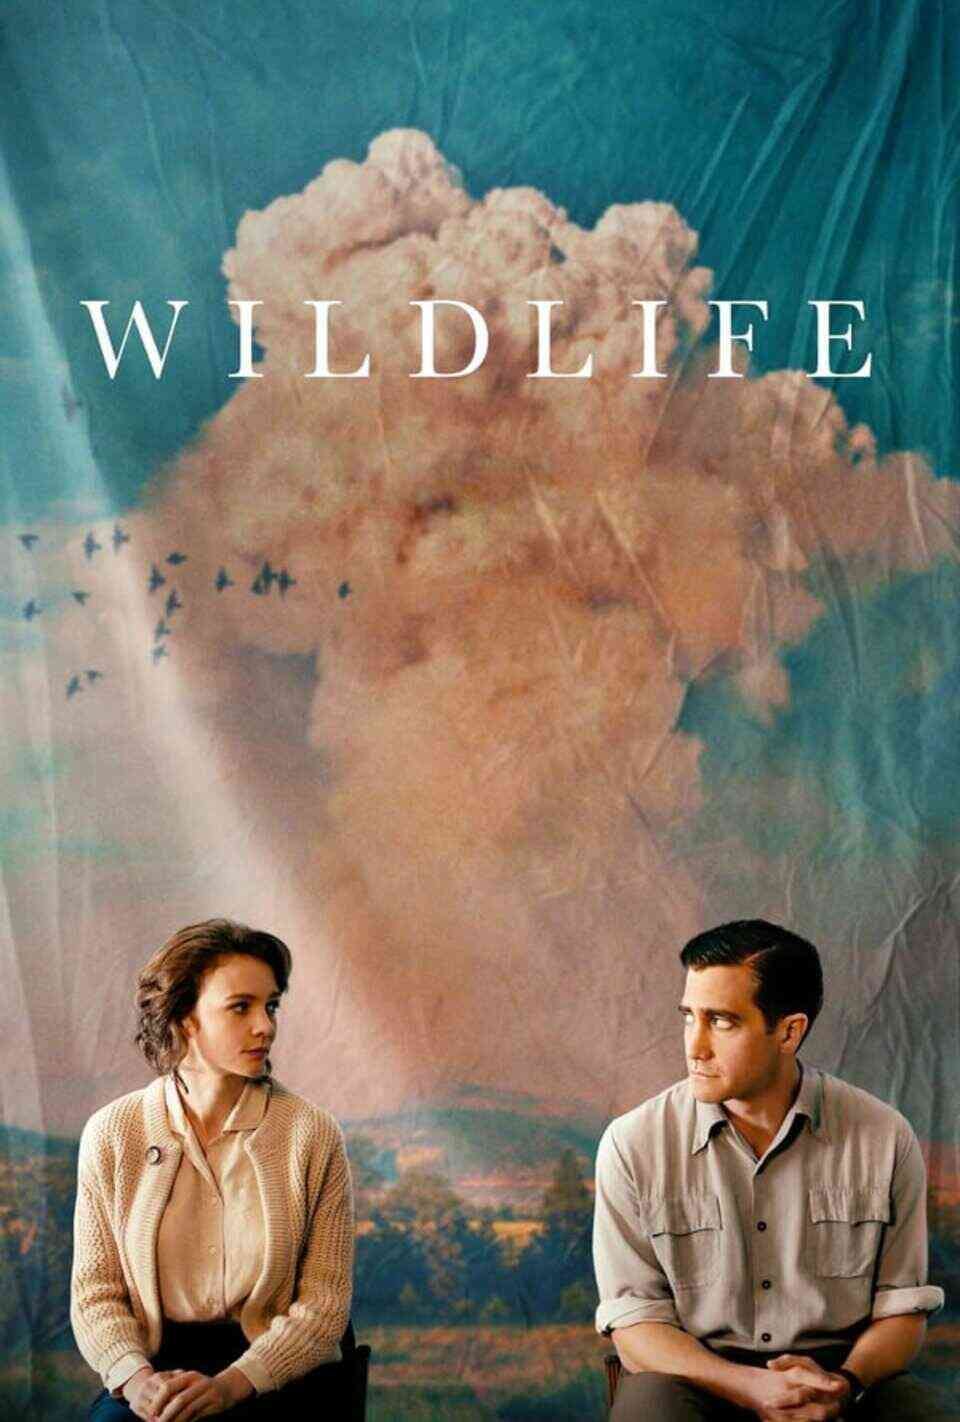 Read Wildlife screenplay (poster)